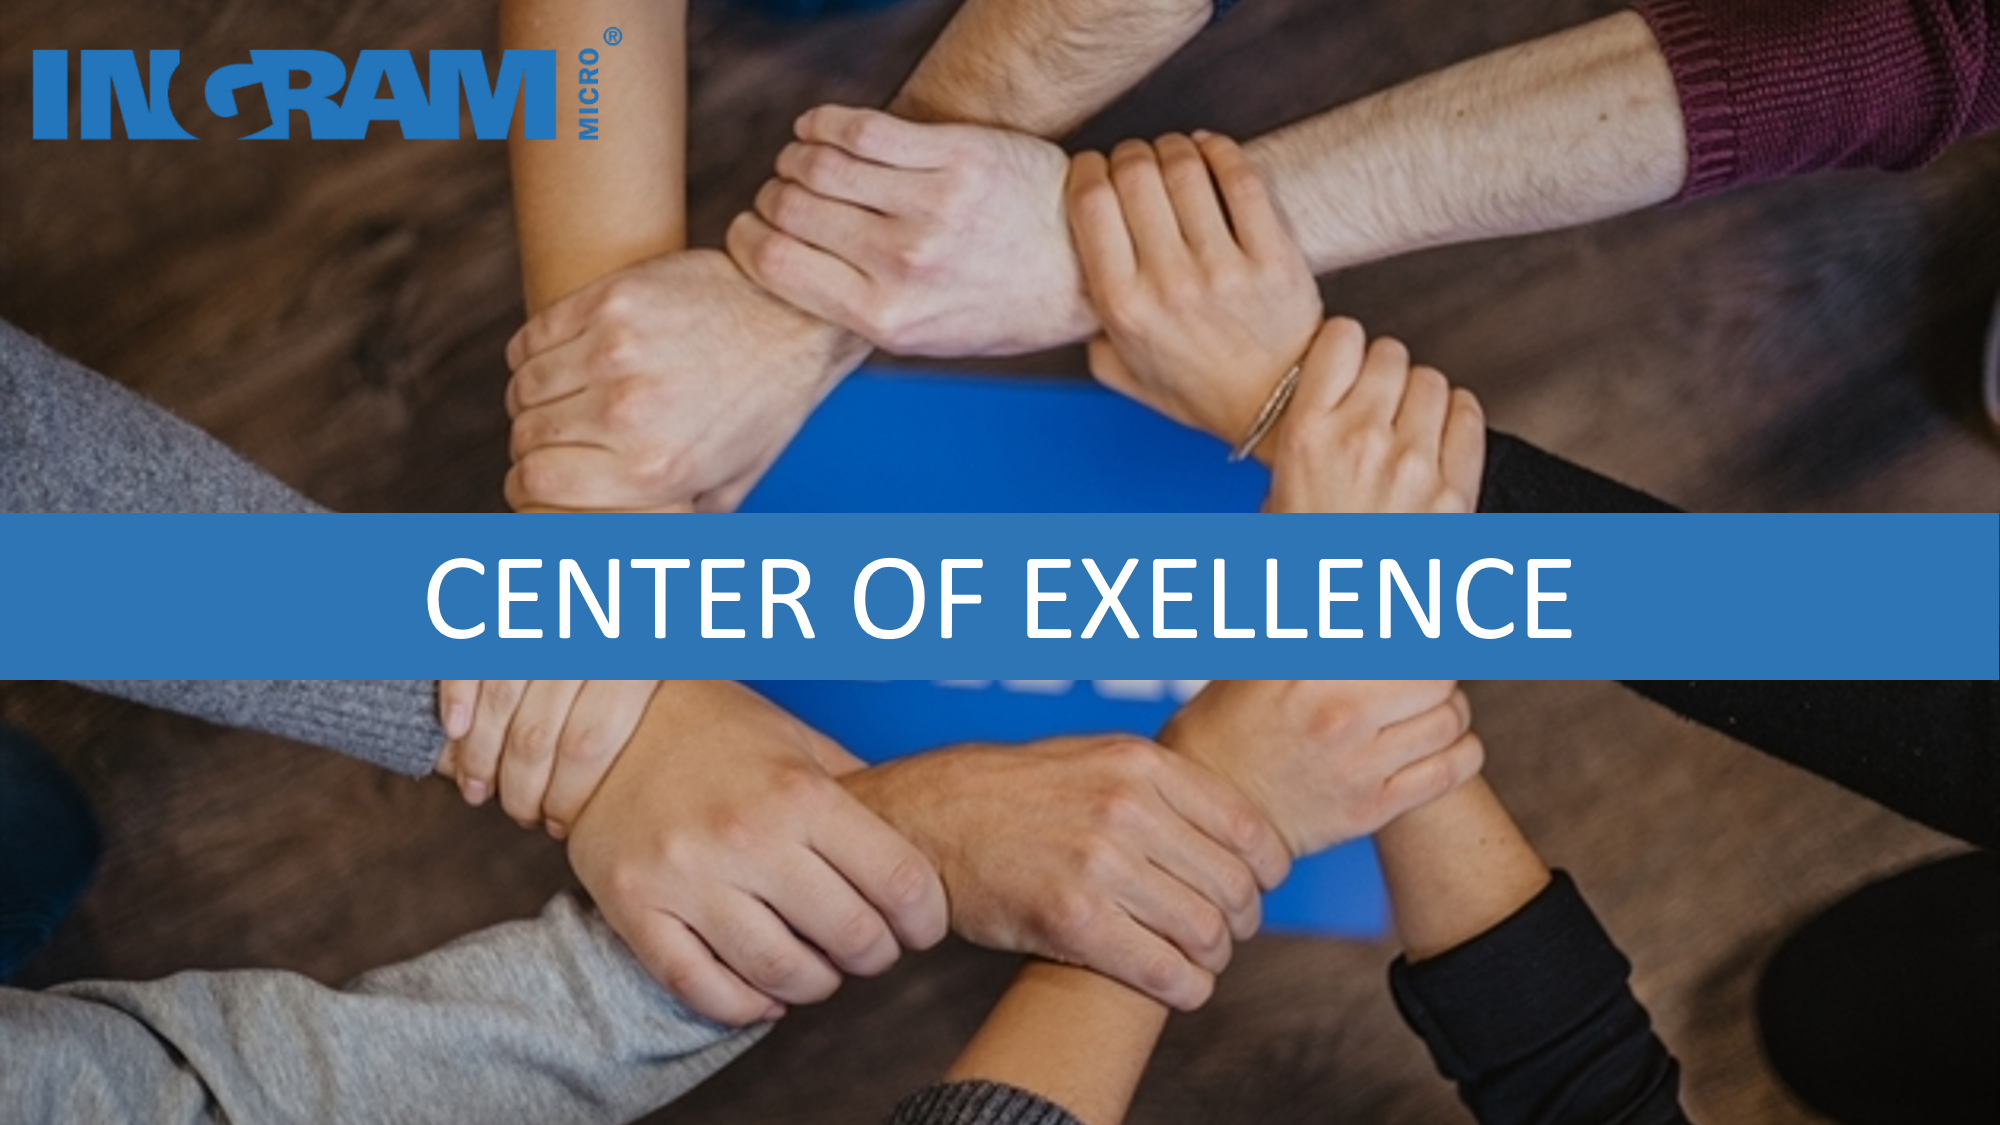 Ingram Micro Center of Excellence 